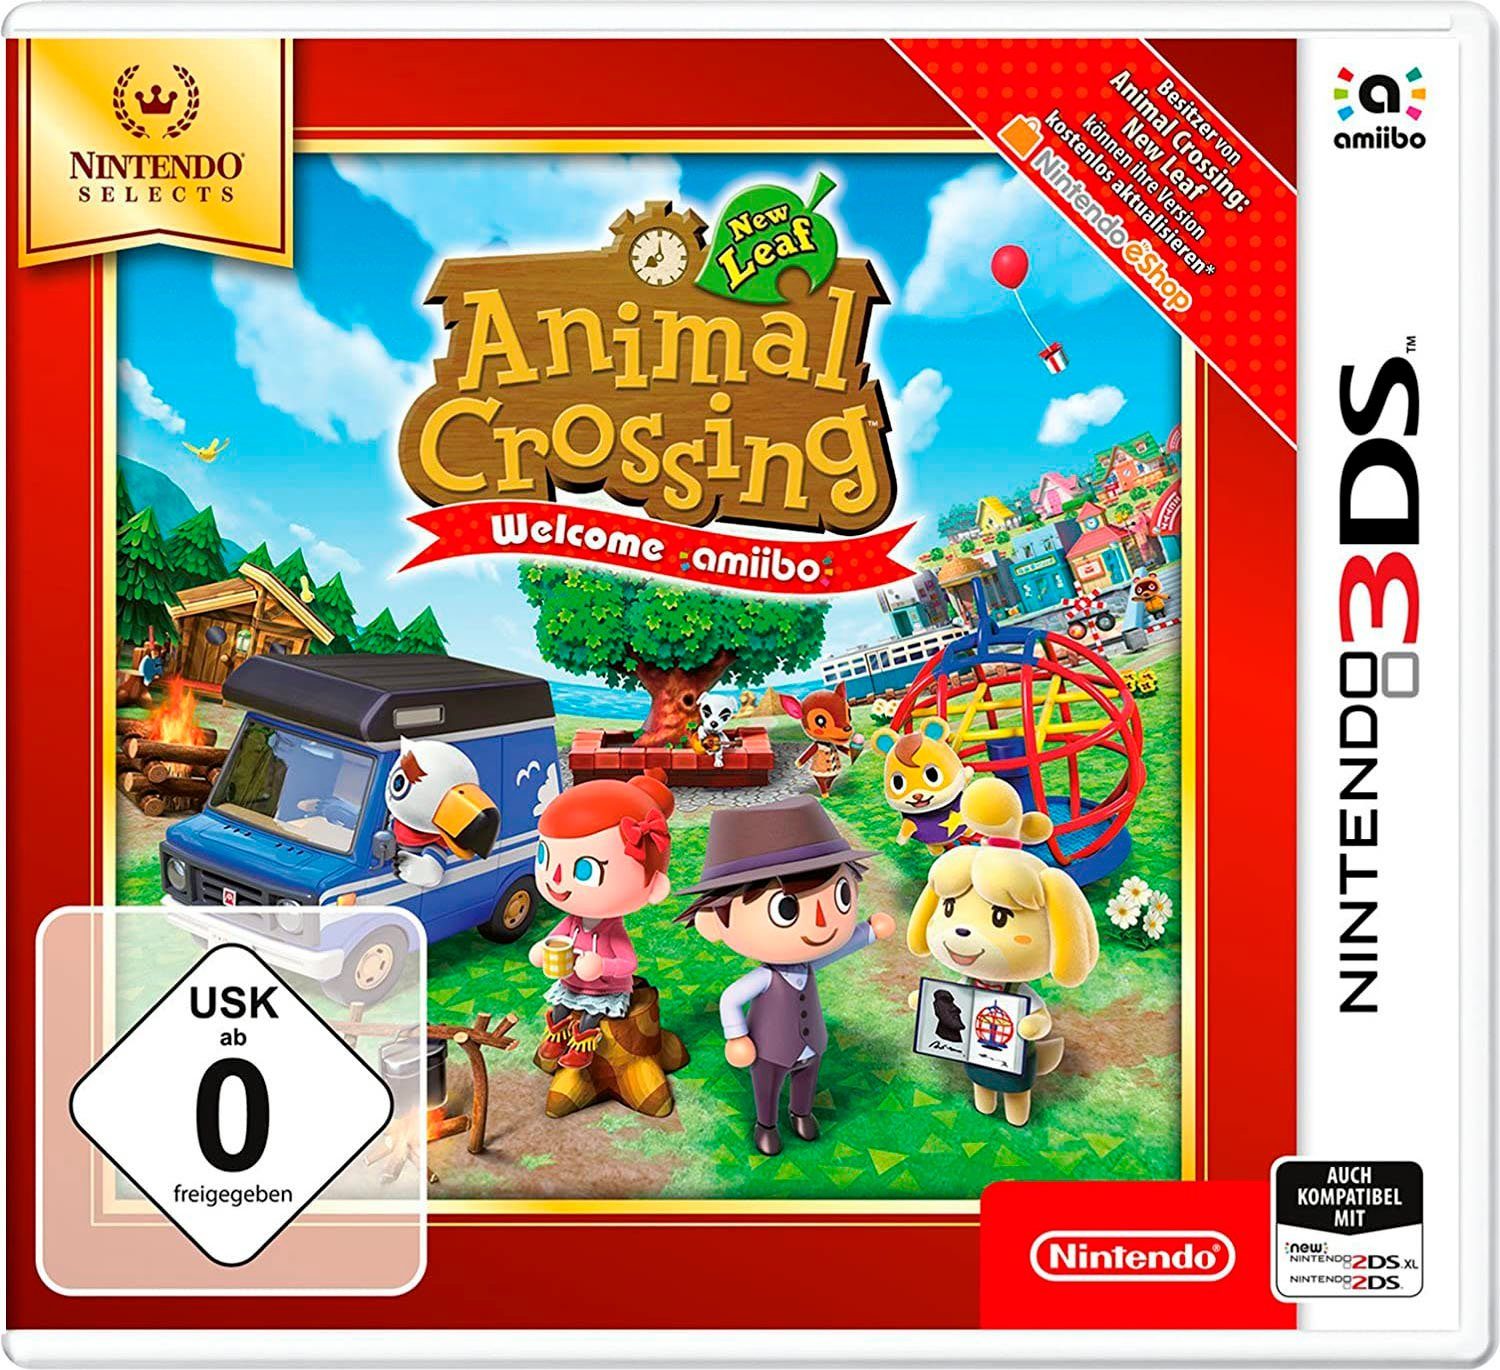 ANIMAL CROSSING AMIIBO LEAF Nintendo NEW 3DS - WELCOME